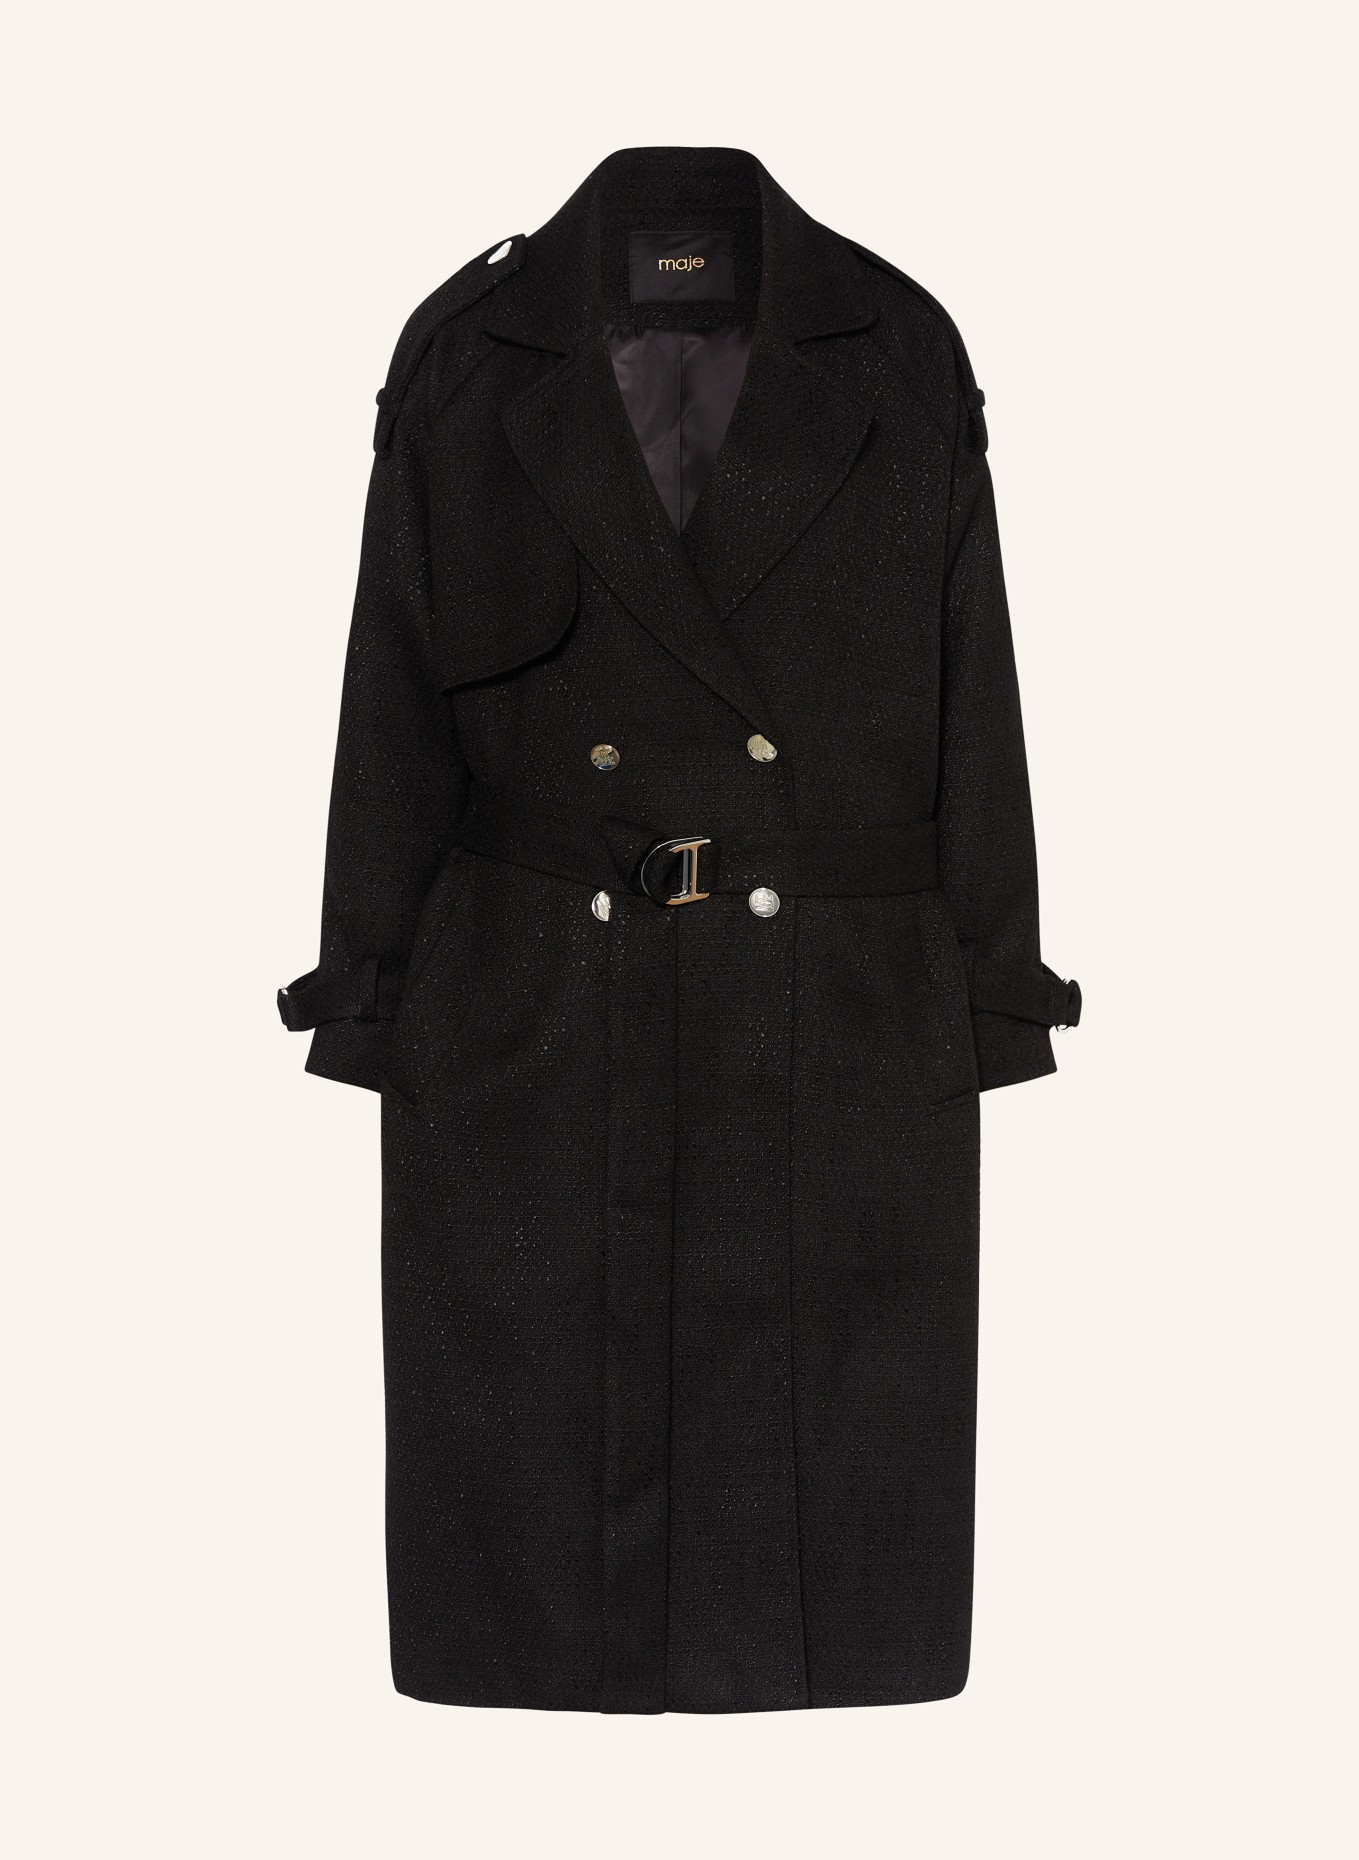 maje Tweed-Mantel, Farbe: SCHWARZ (Bild 1)